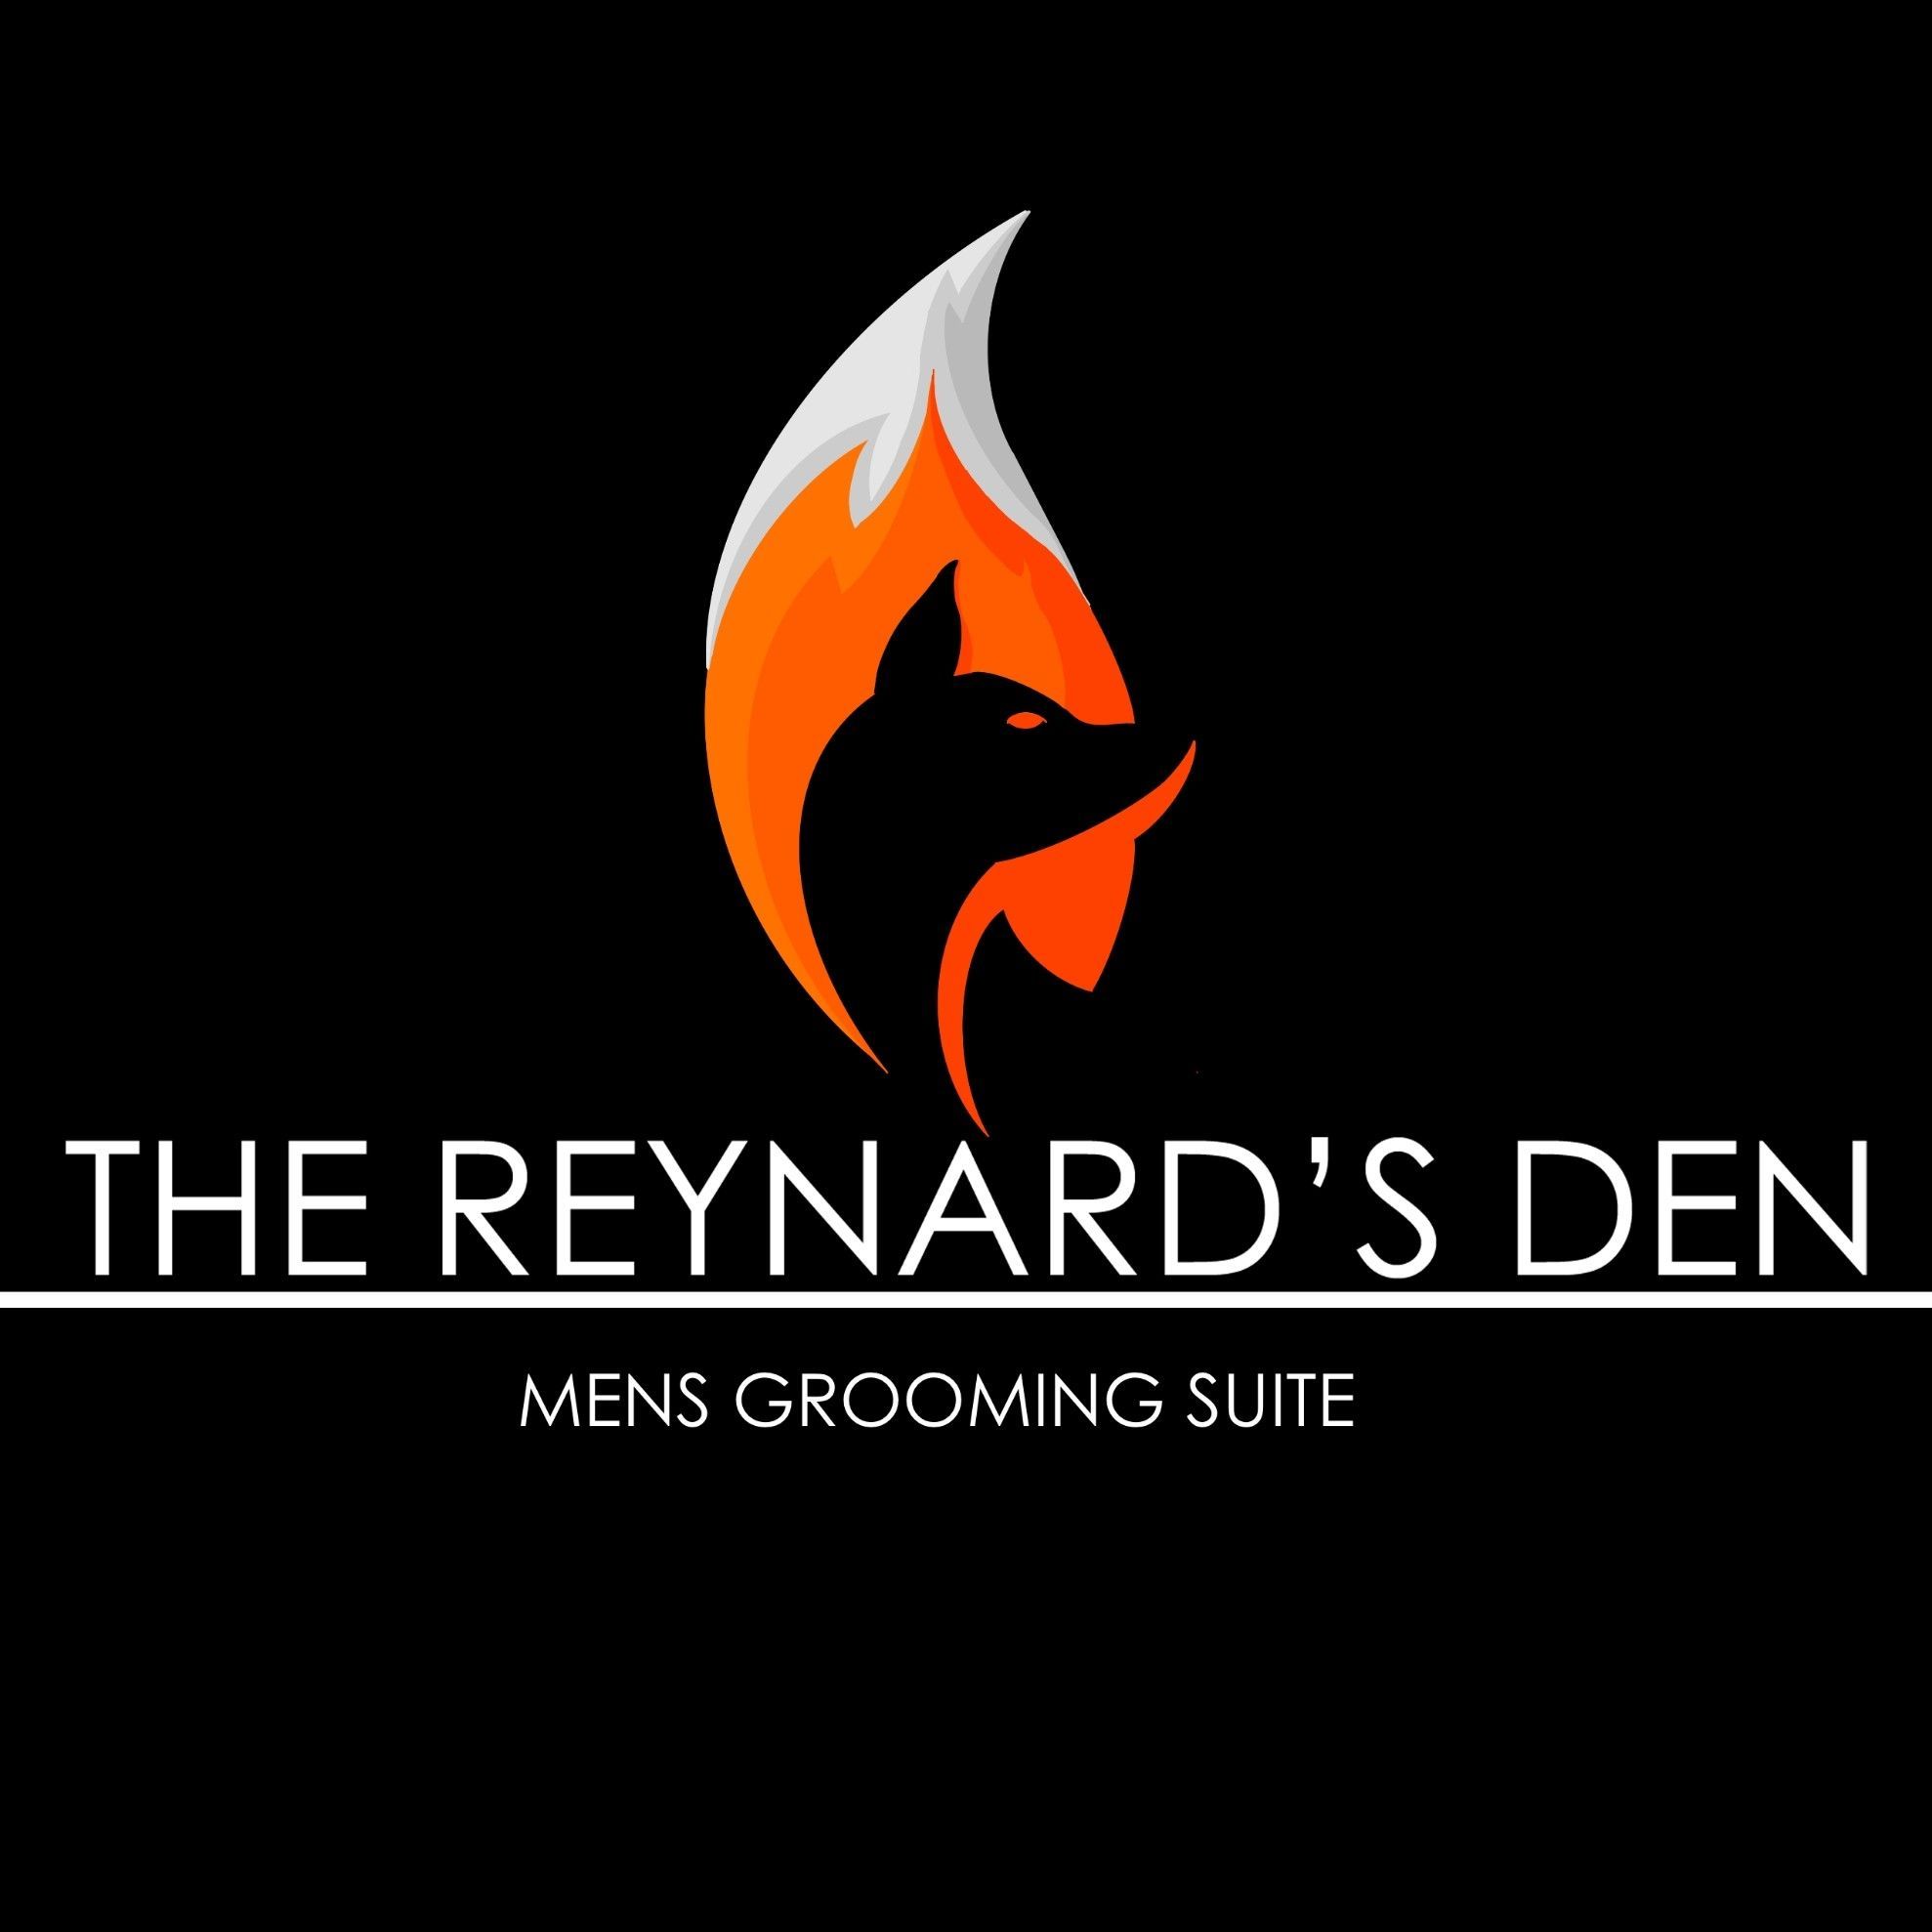 The Reynards Den Barber Suite, 1151 Hammond Drive NE Suite 200, Salon Suites (Upstairs-Studio #103), 30346, Dunwoody, Salon Studios Beauty Mall, Dunwoody, 30346